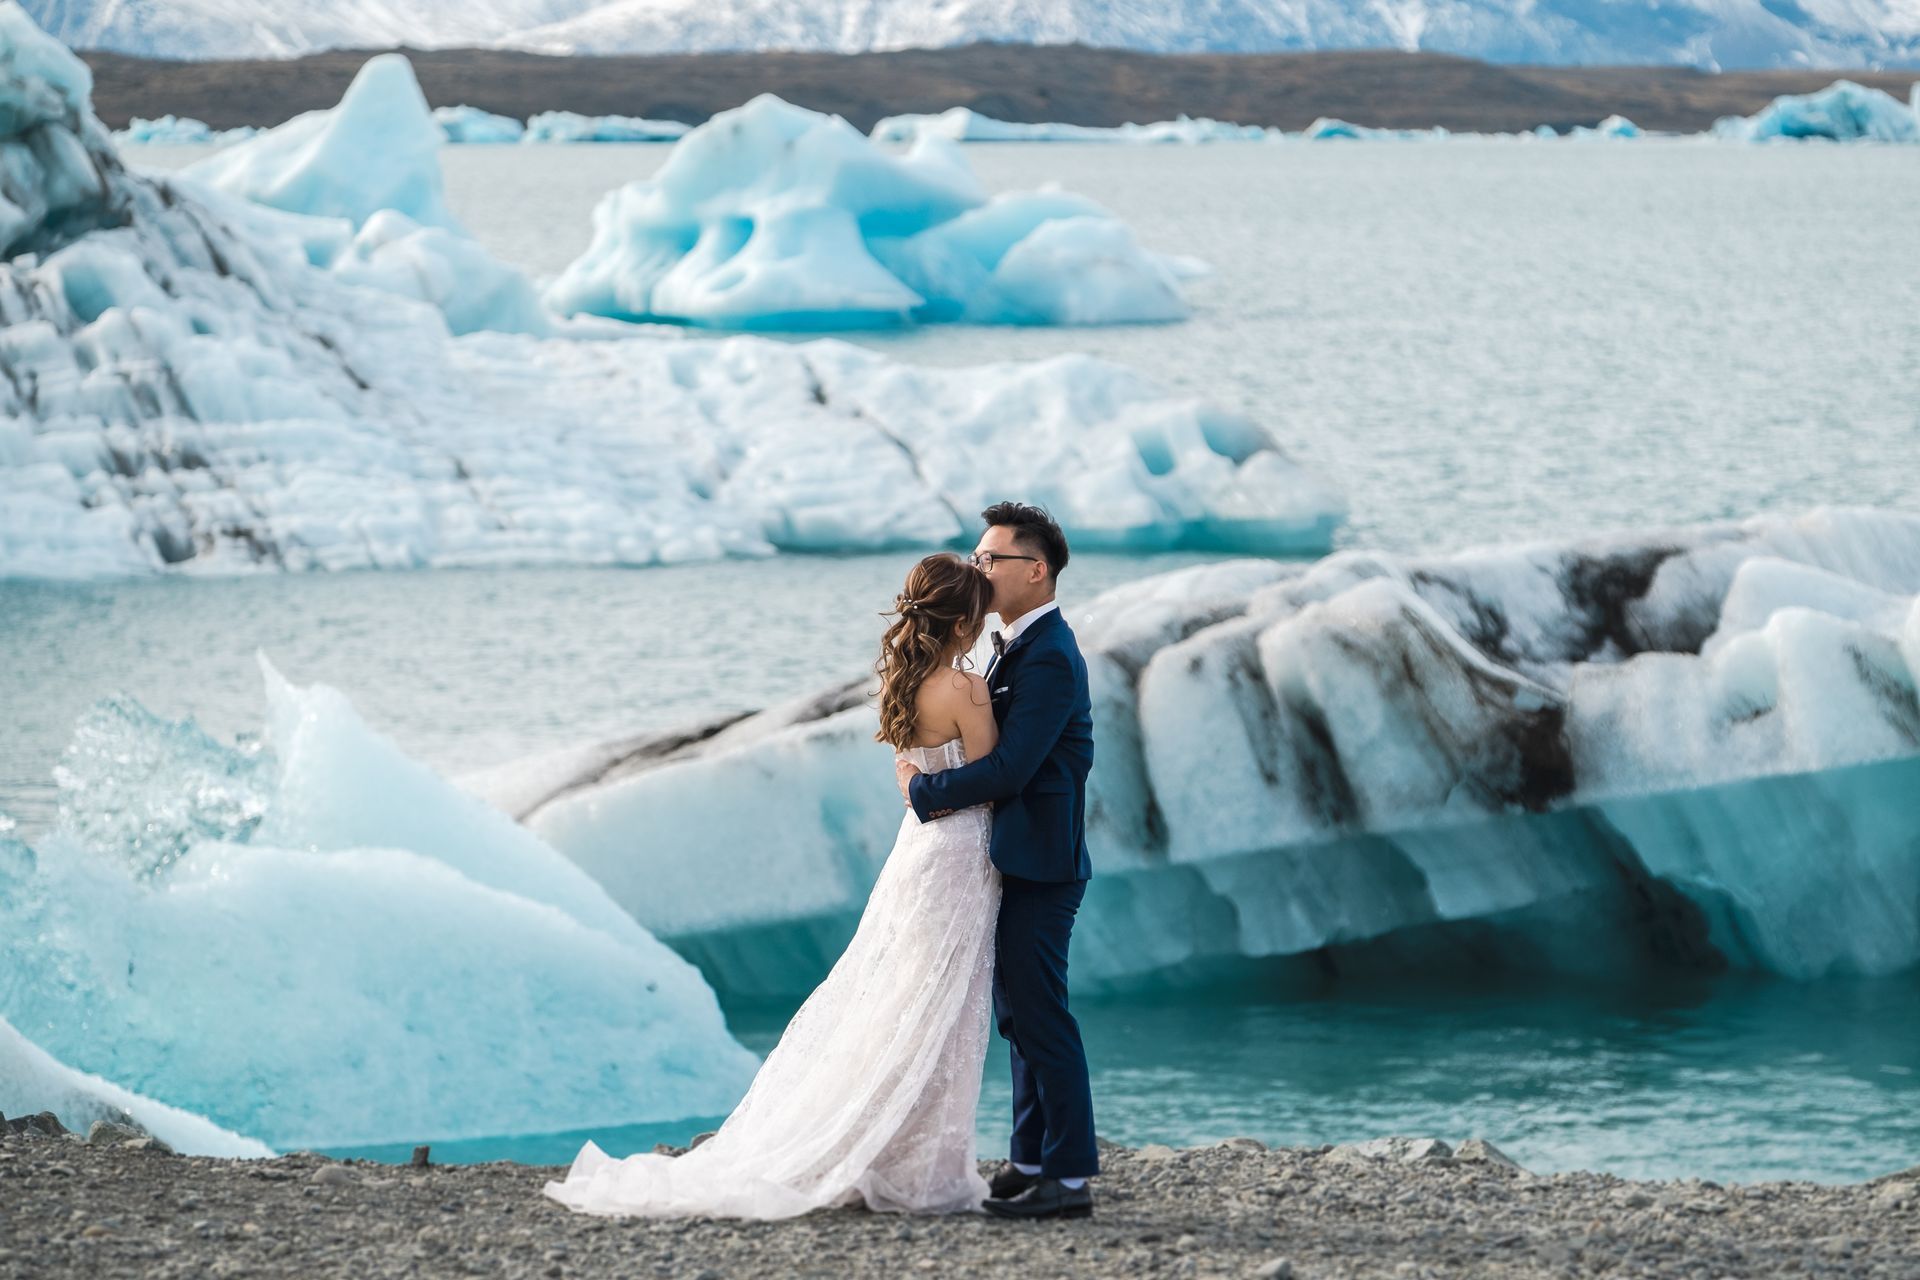 Pre-wedding Adventure Session at Jökulsárlón Glacier Lagoon in Iceland